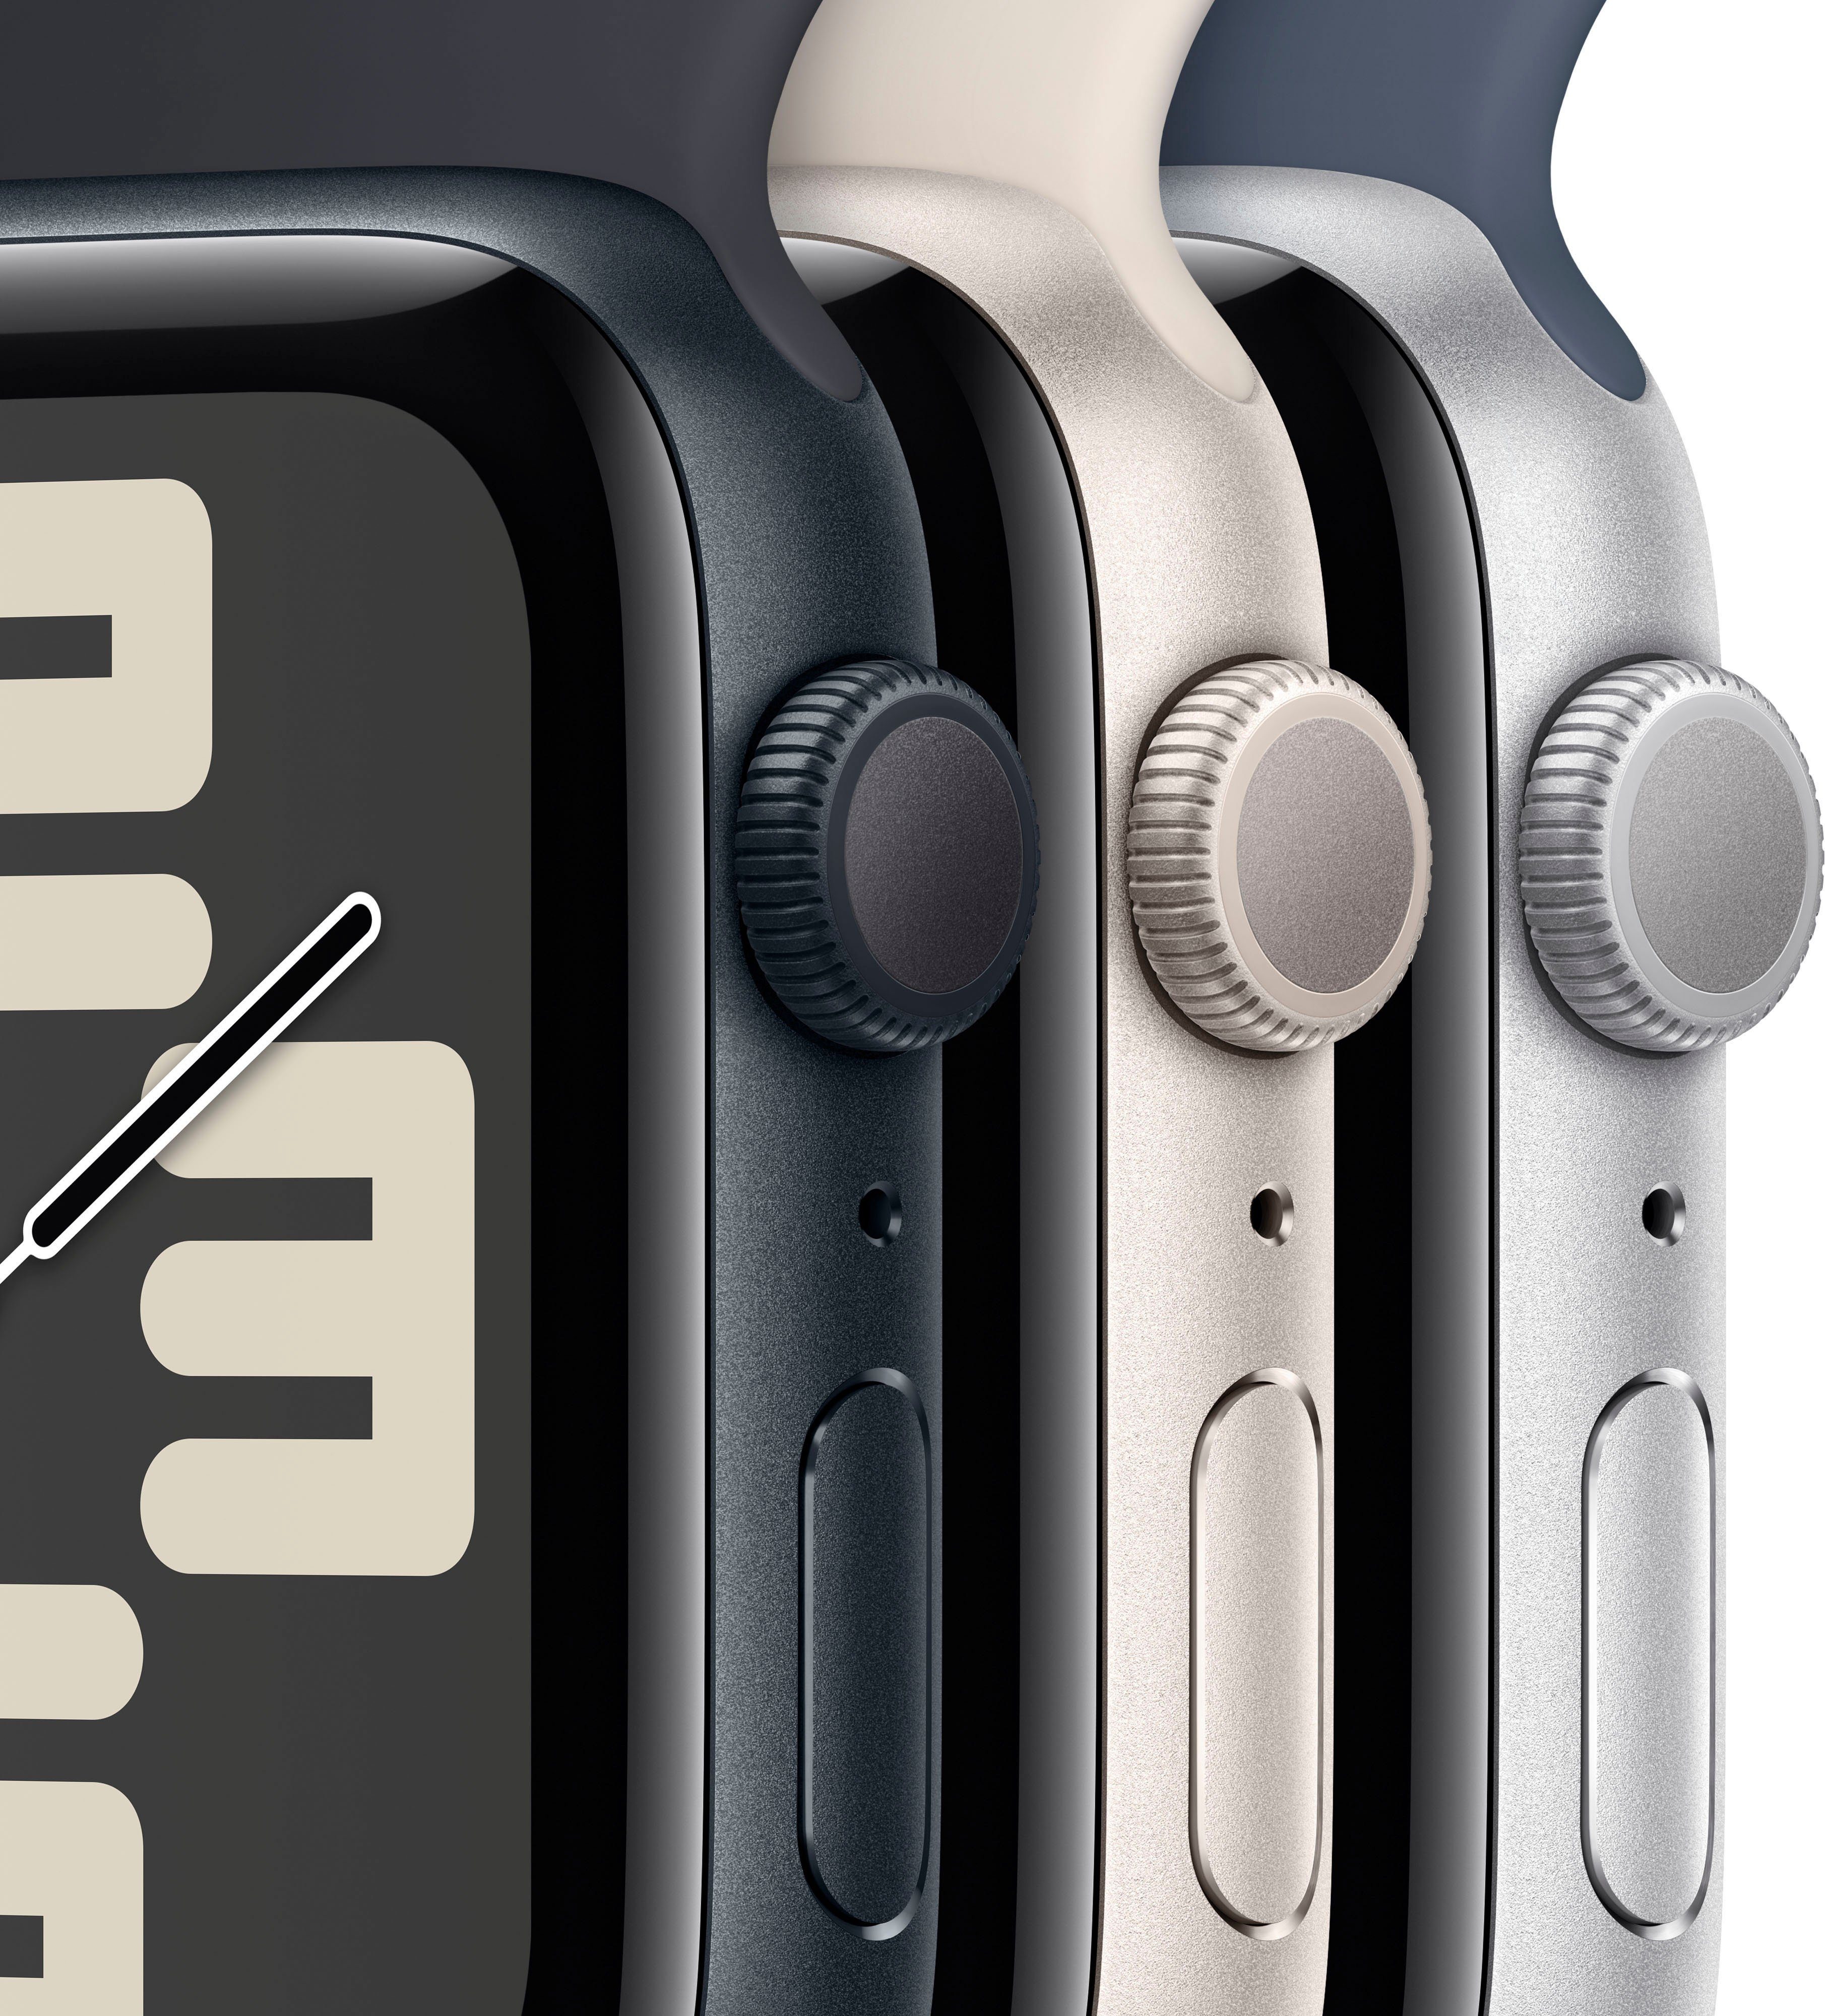 Apple Watch winter Cellular OS 44 (4,4 | 10), blau cm/1,73 Loop mm + SE Watch Zoll, Smartwatch GPS Sport blue Aluminium